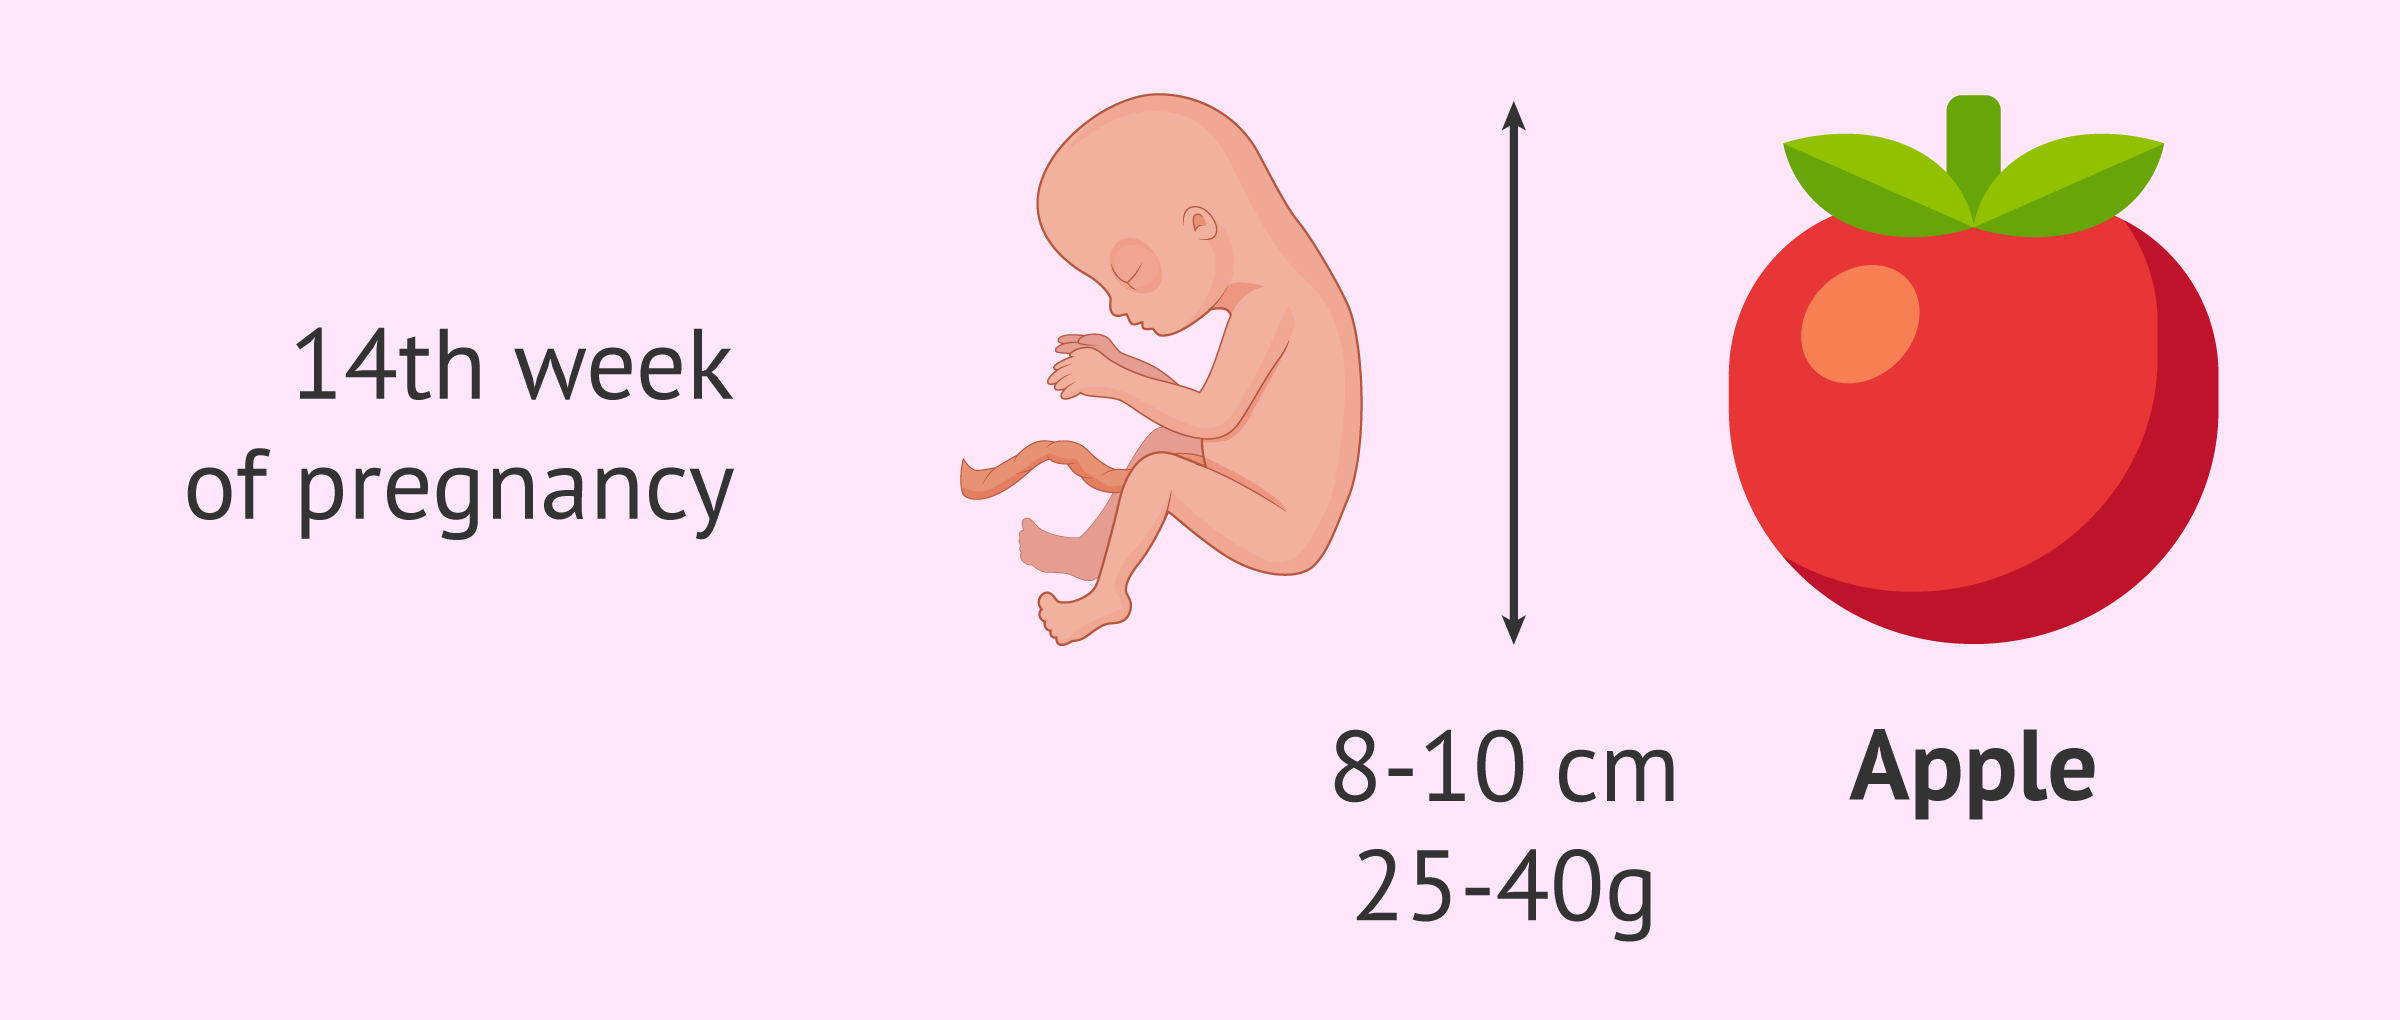 Fetal development at week 14